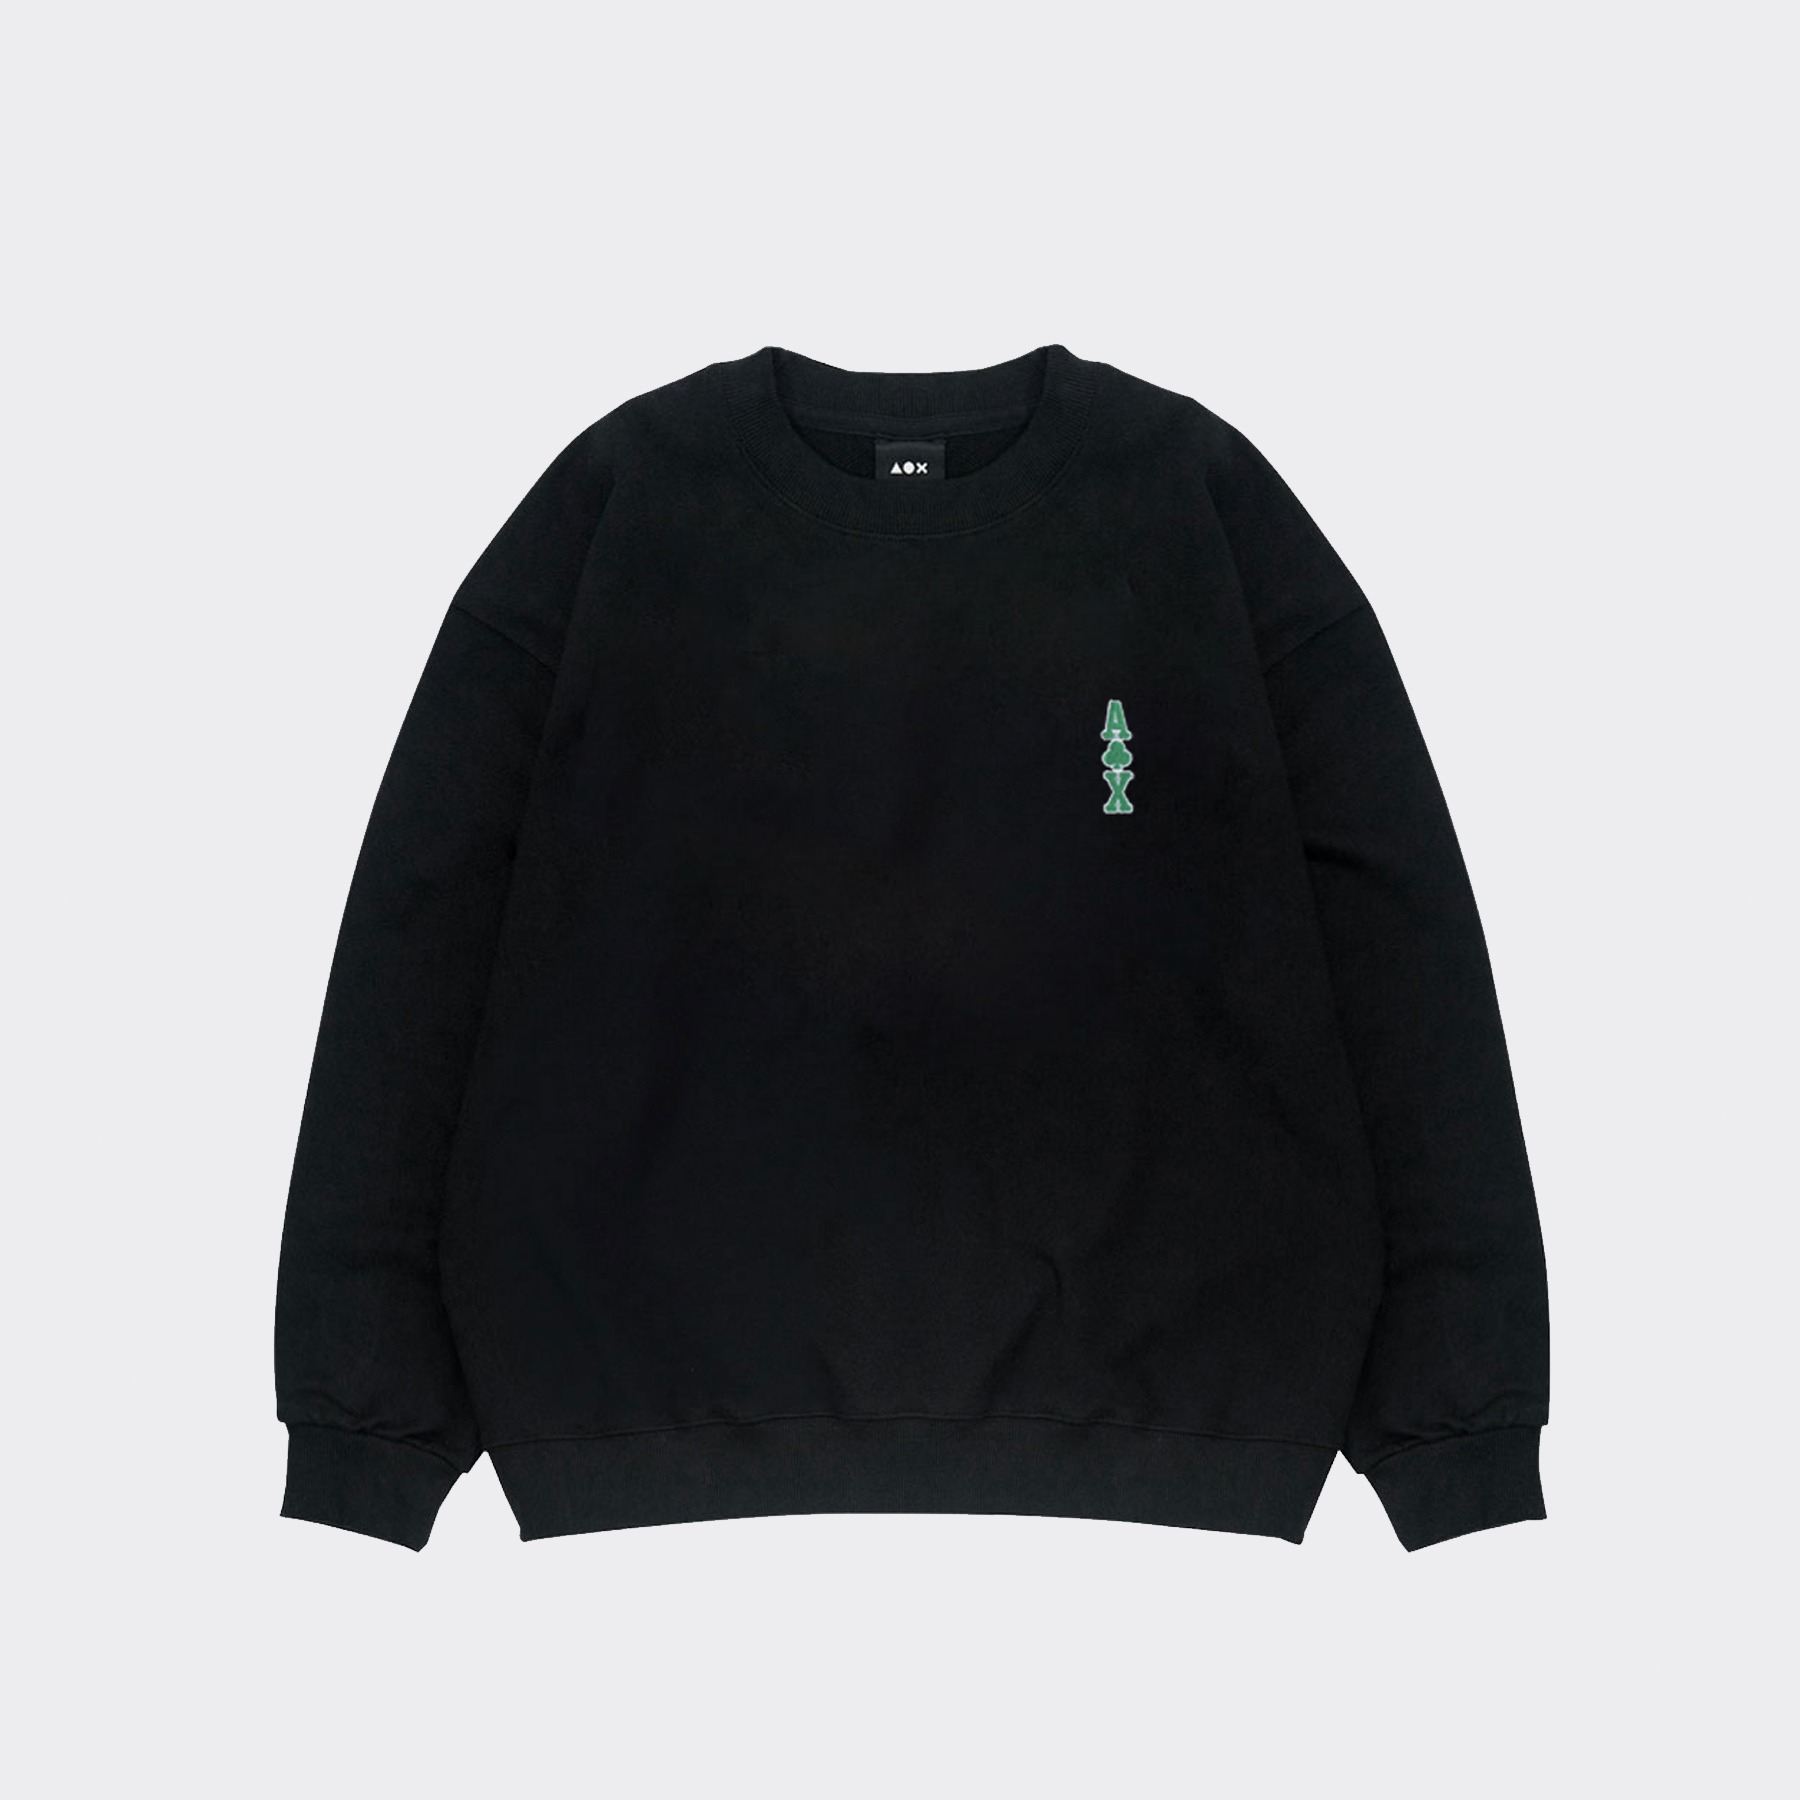 Clover Embroidered Sweatshirts (Black)